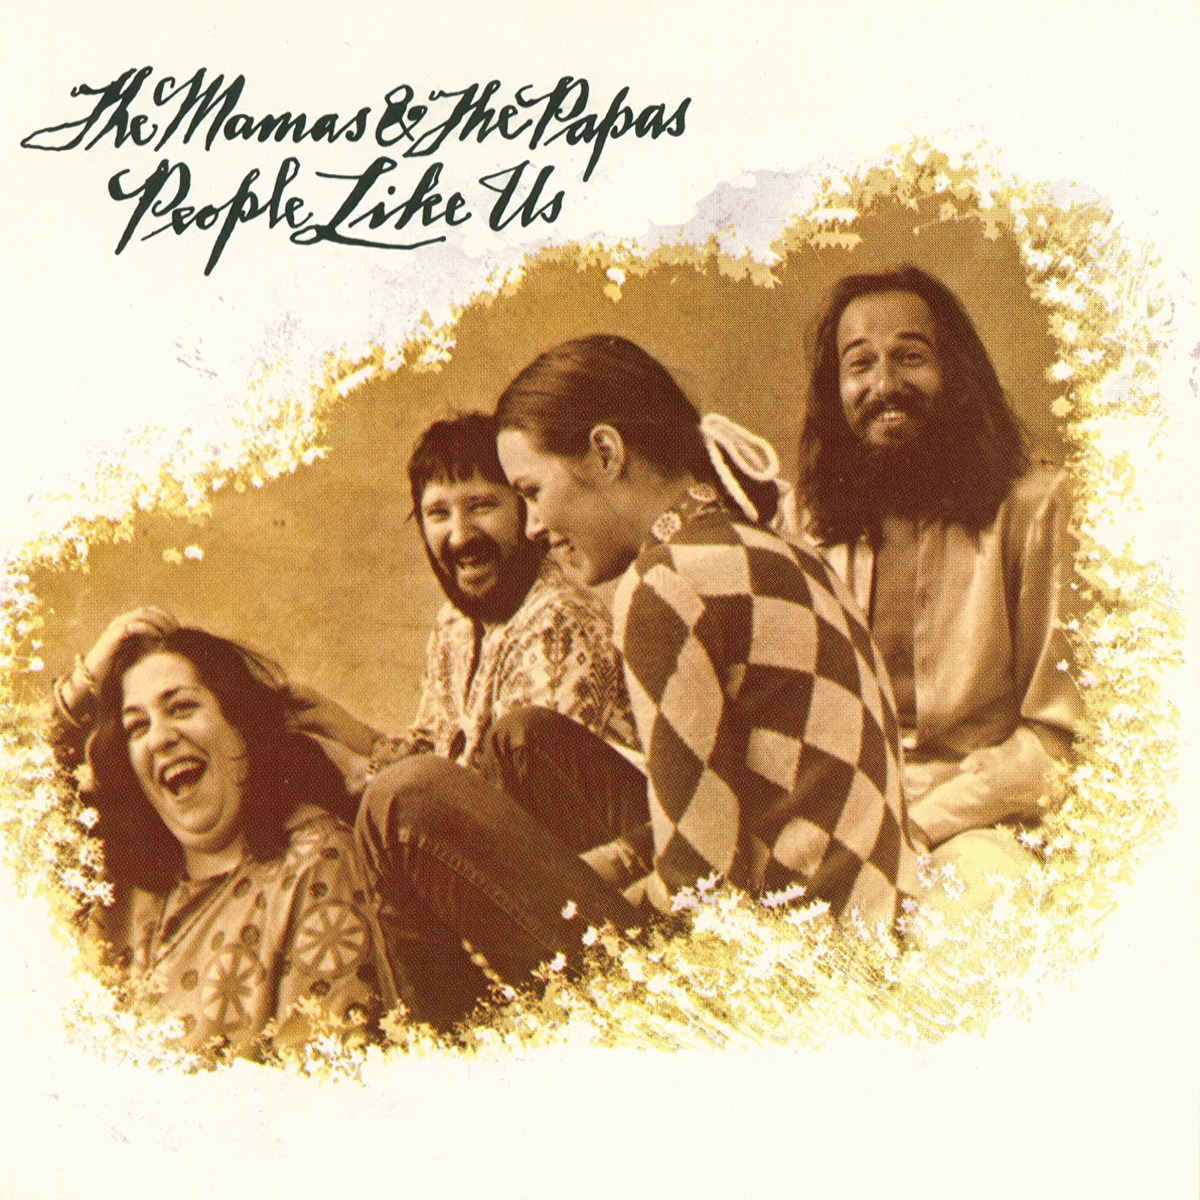 People Like Us - Album by The Mamas & The Papas - Apple Music